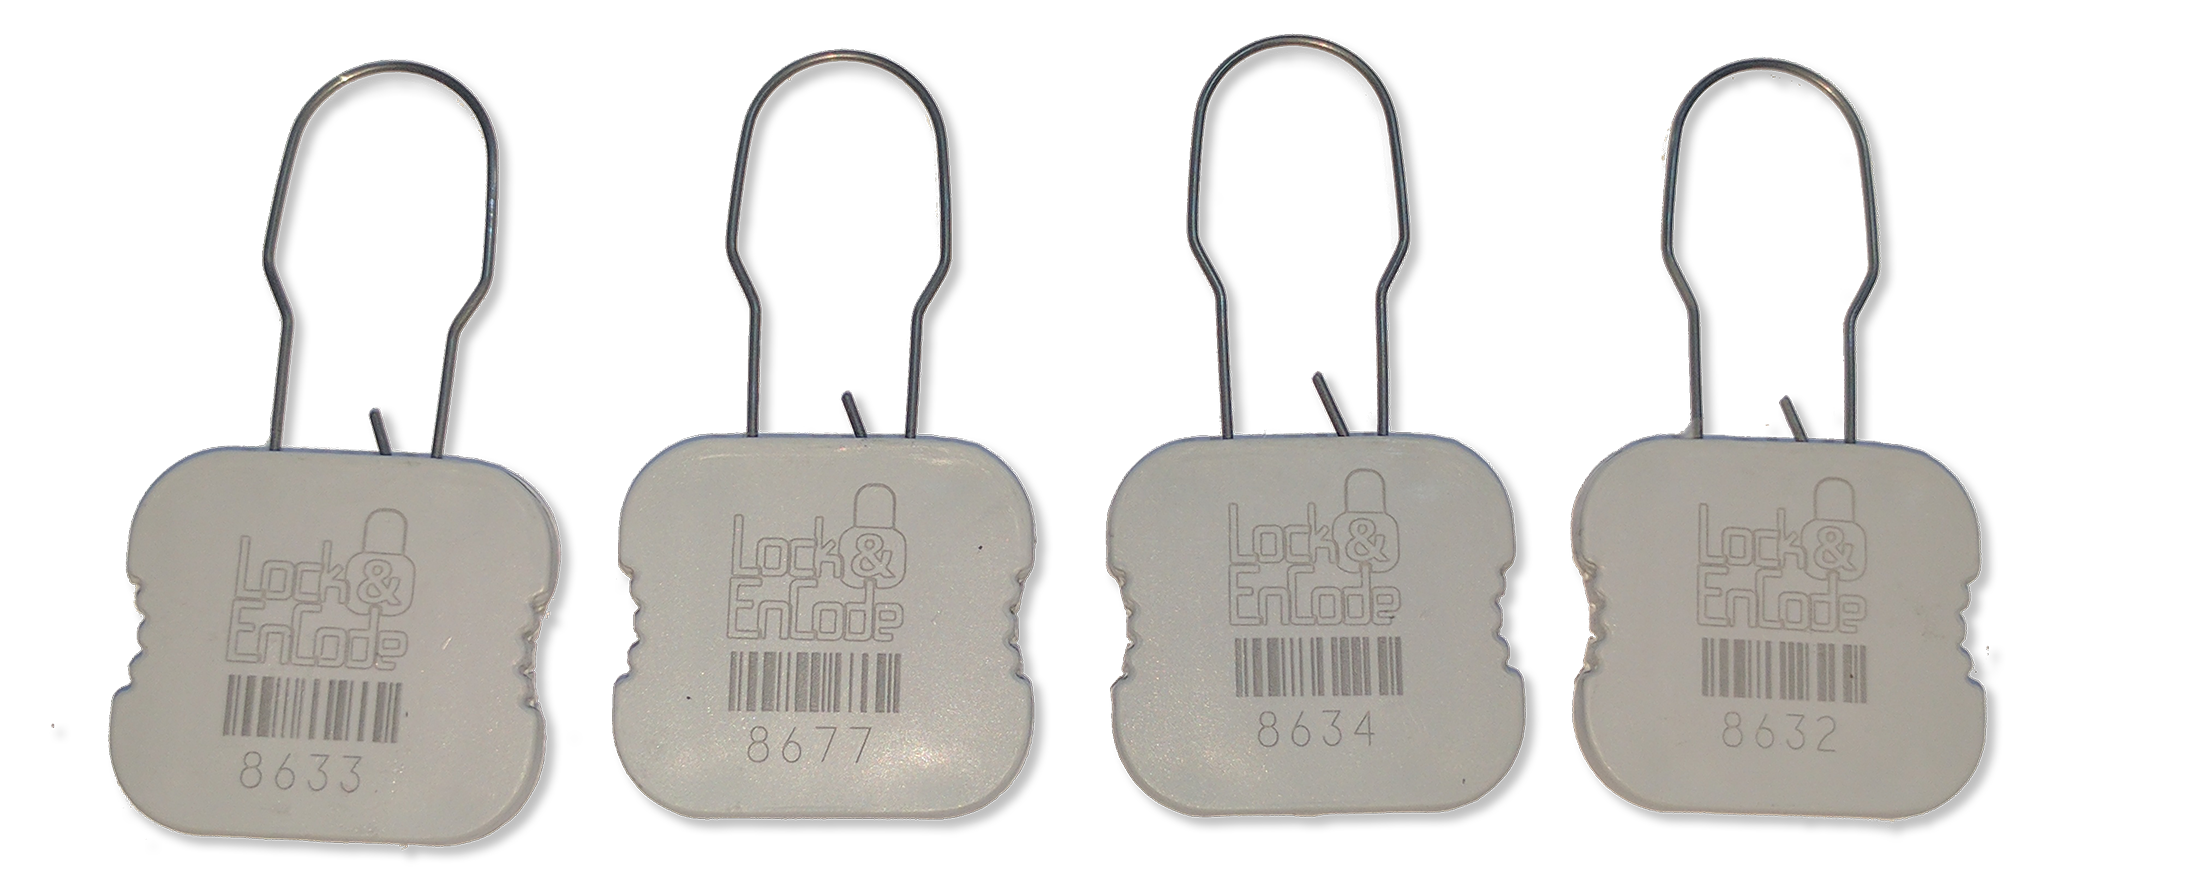 CYBRA's Lock & EnCode RFID seals secure shipments in transit.